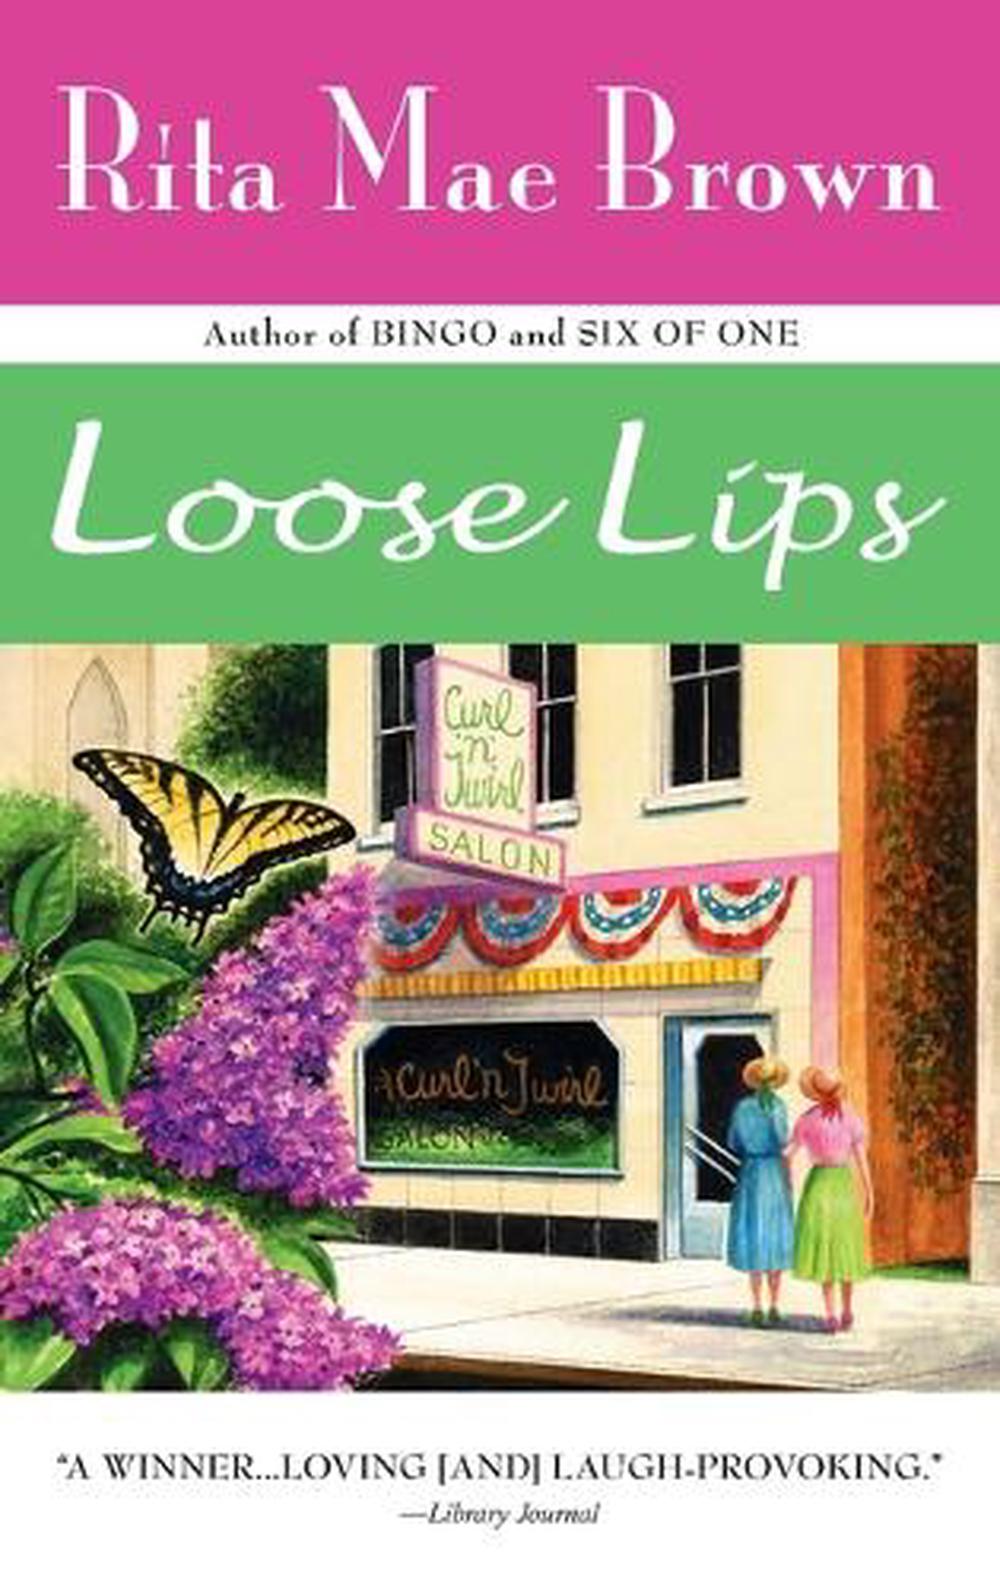 Loose Lips by Rita Mae Brown